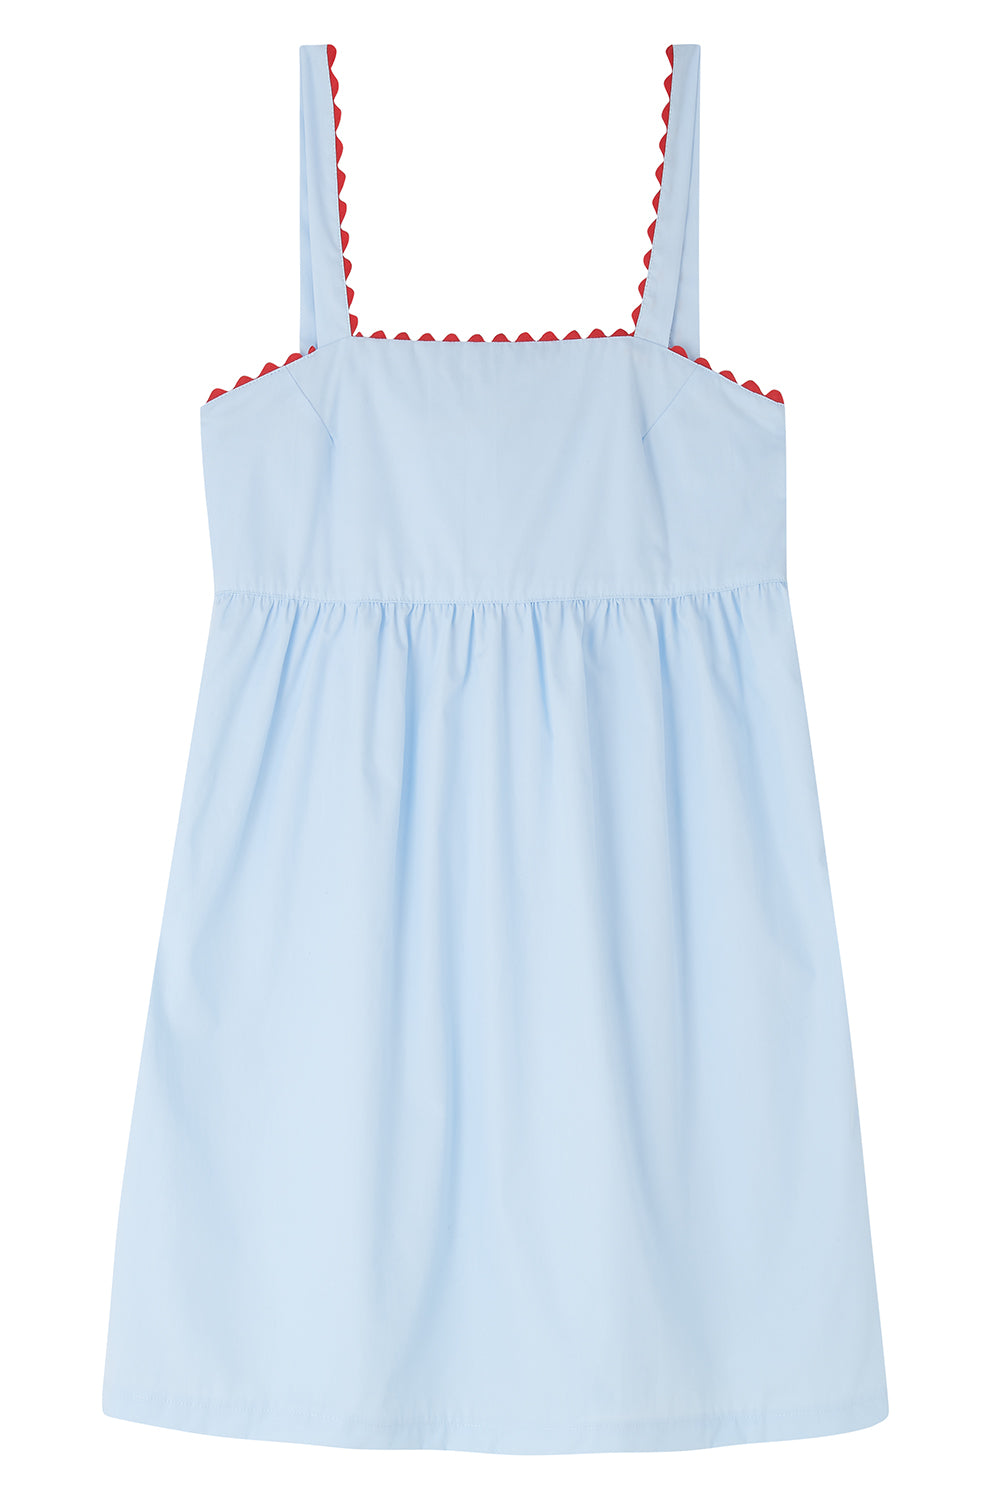 Pale Blue Mini Nightdress with Red Ric Rac - 100% Cotton Poplin